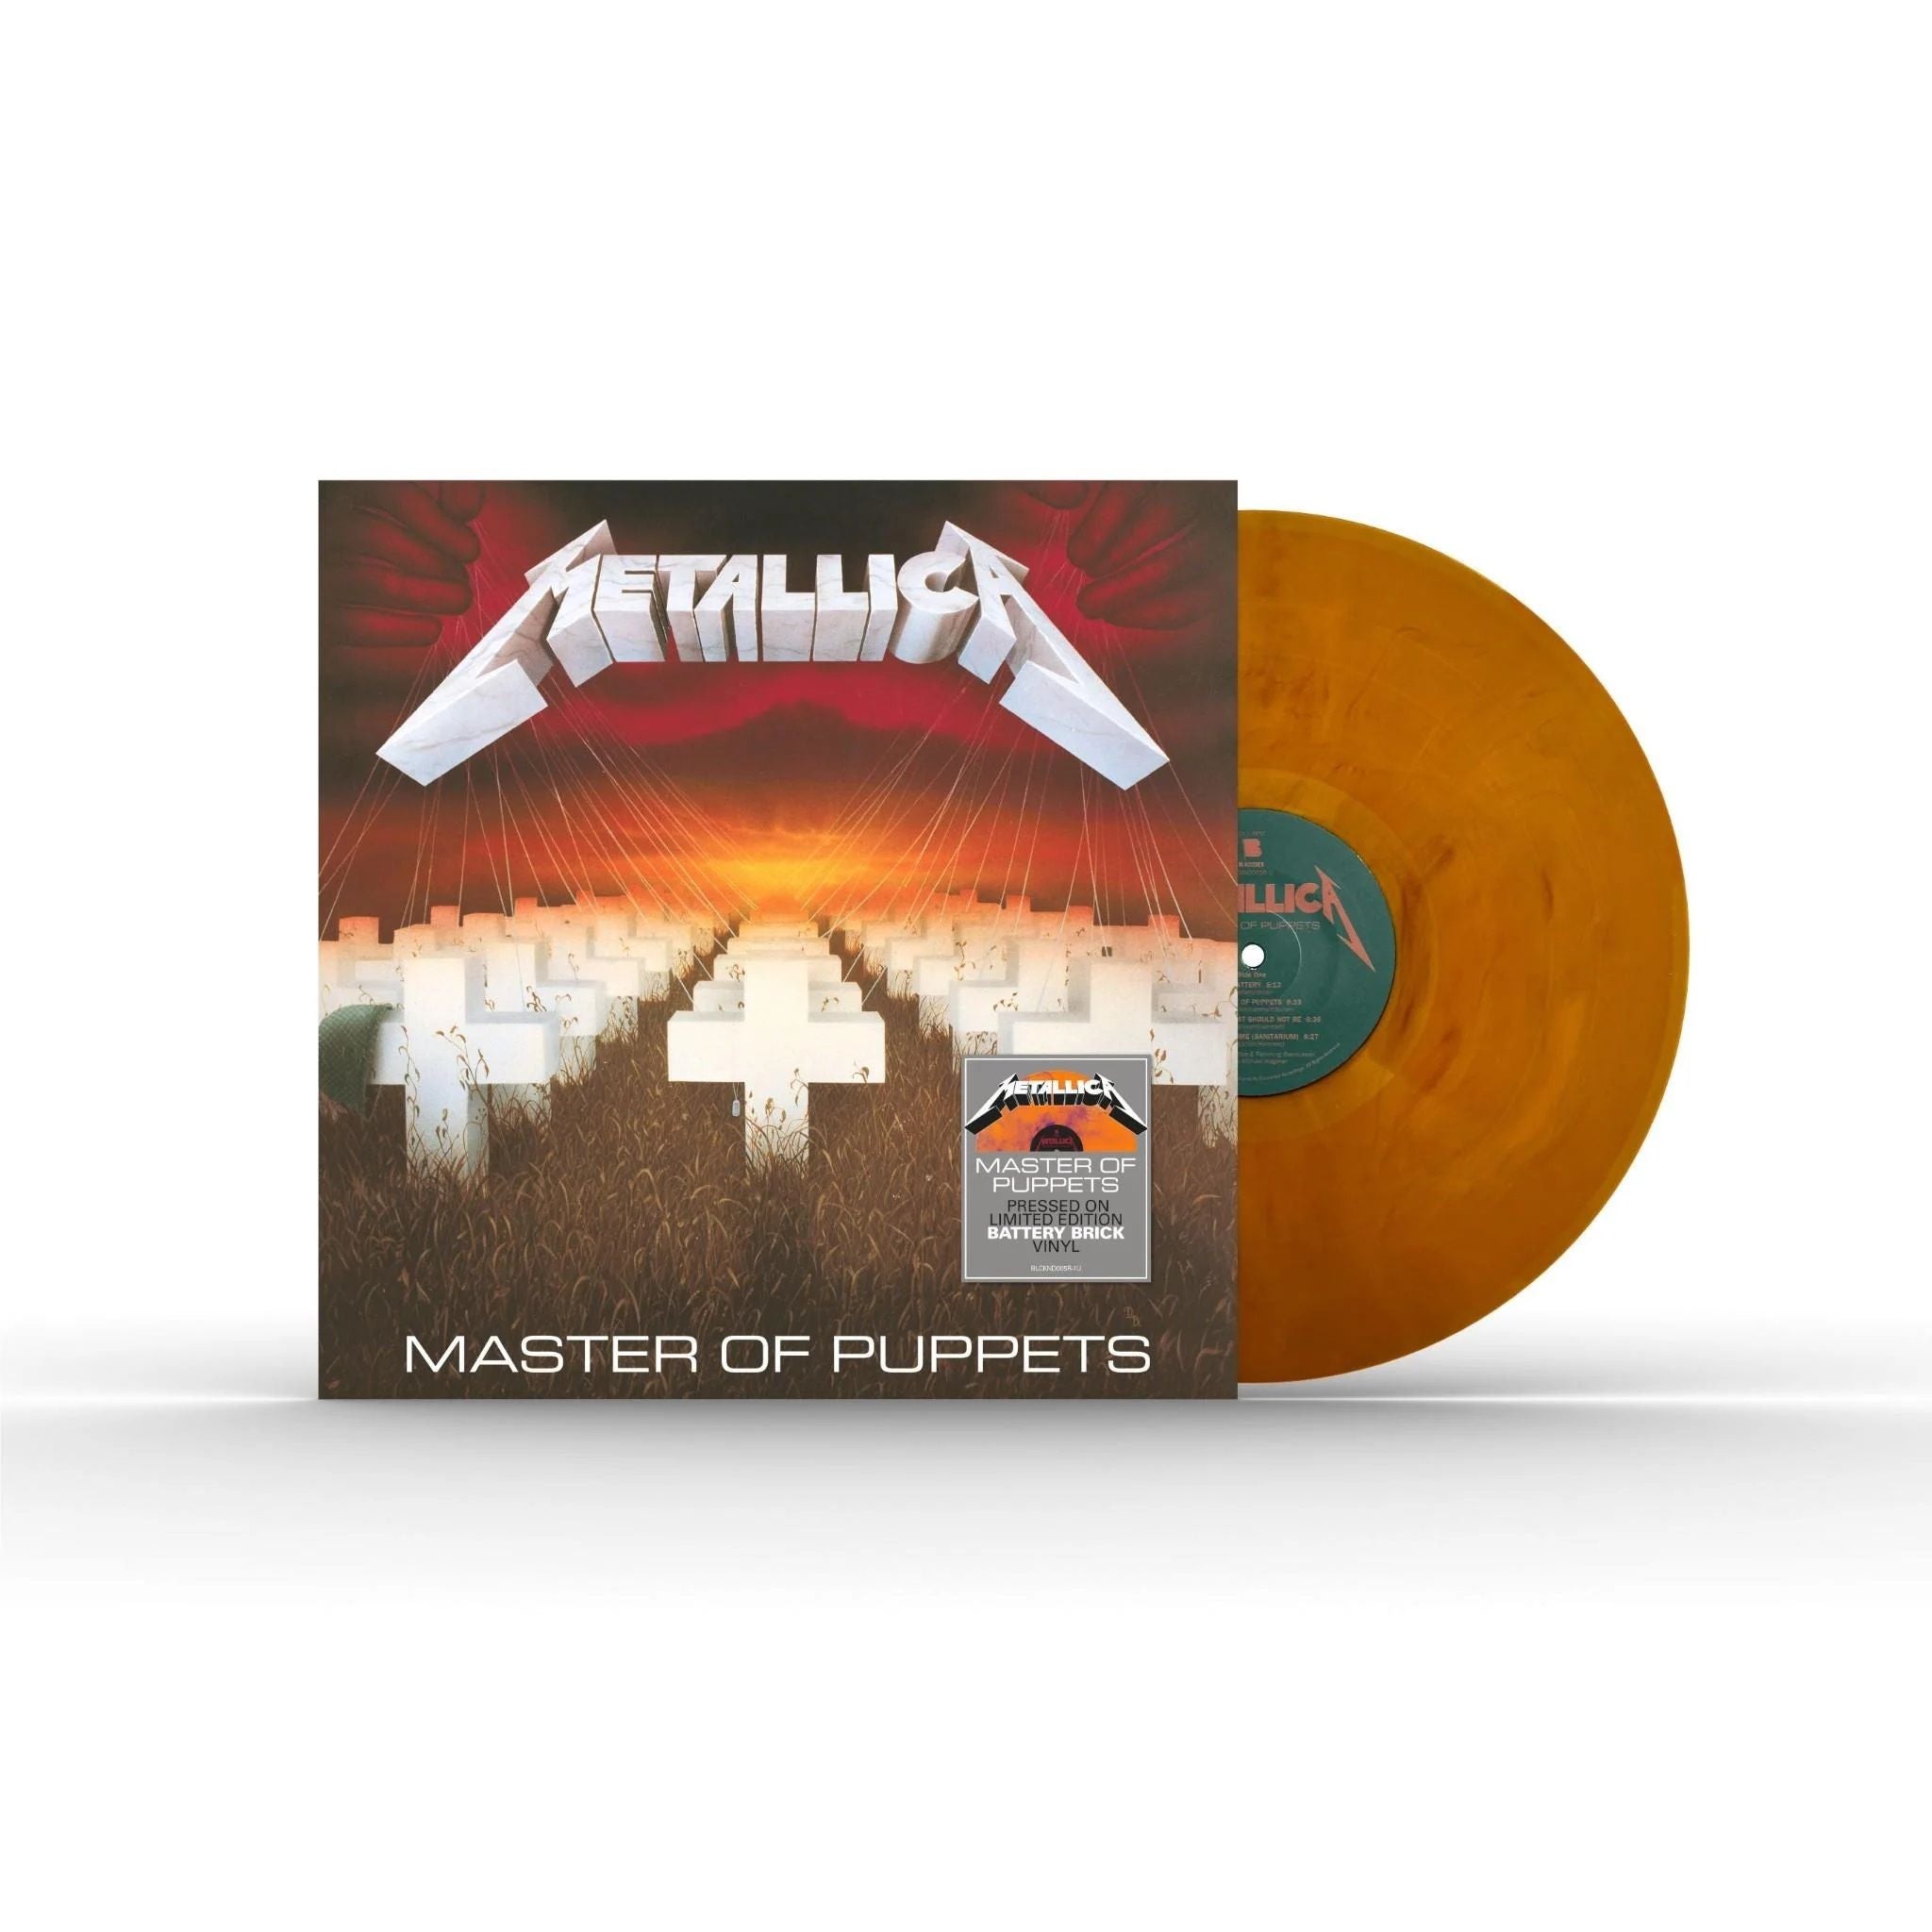 Metallica - Master Of Puppets (Battery Brick Vinyl) - Vinyl - New - PRE-ORDER